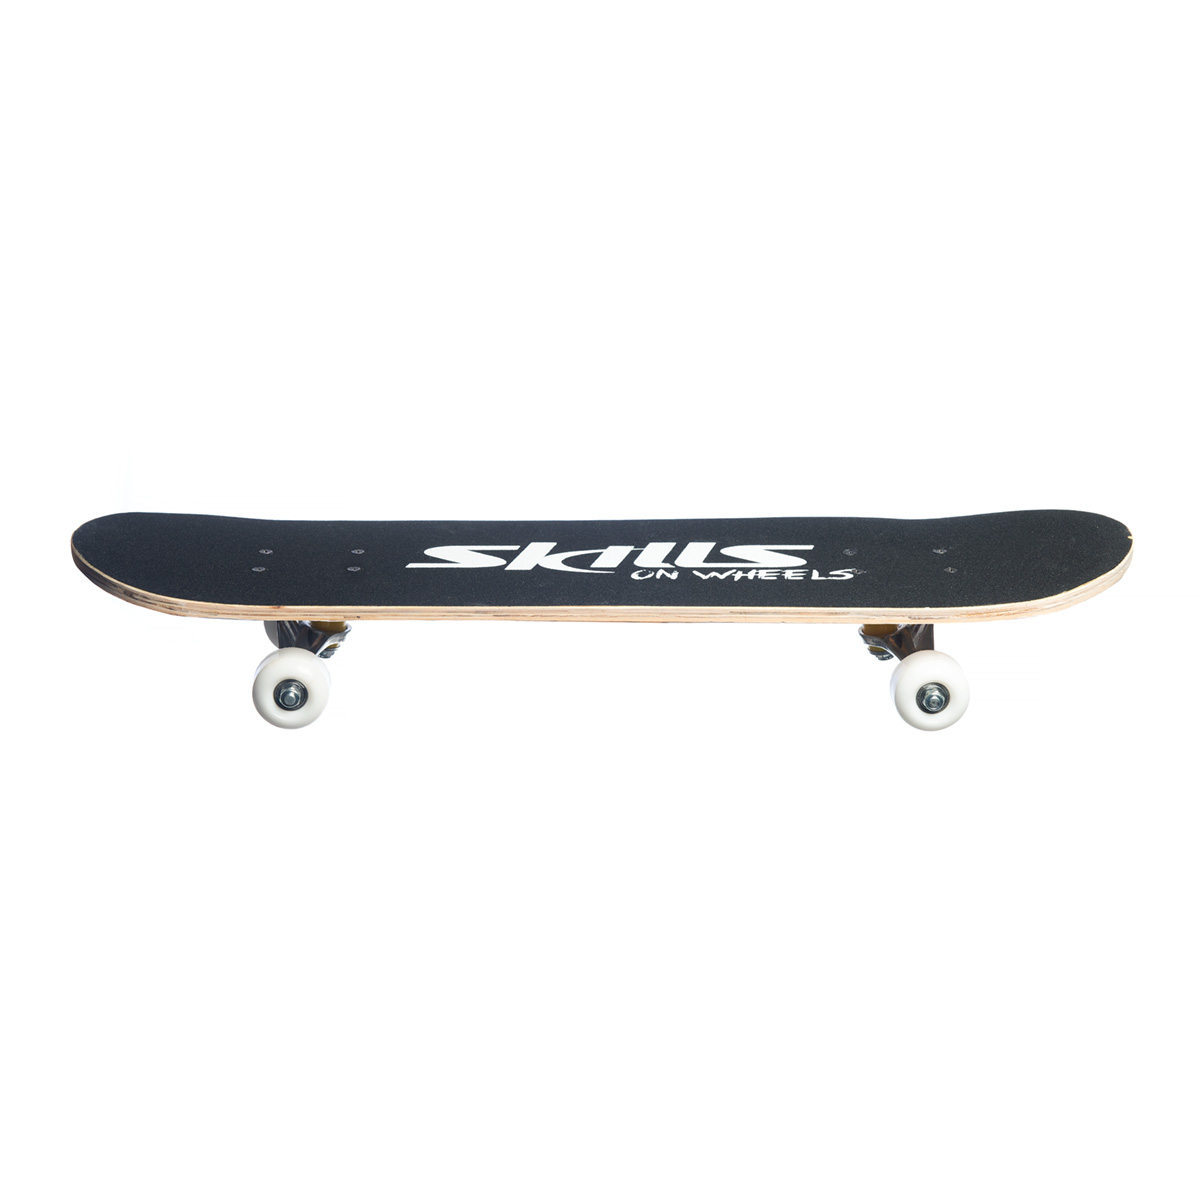 Kjøp Skills Skateboard Pro 70 cm hos Lekia.no